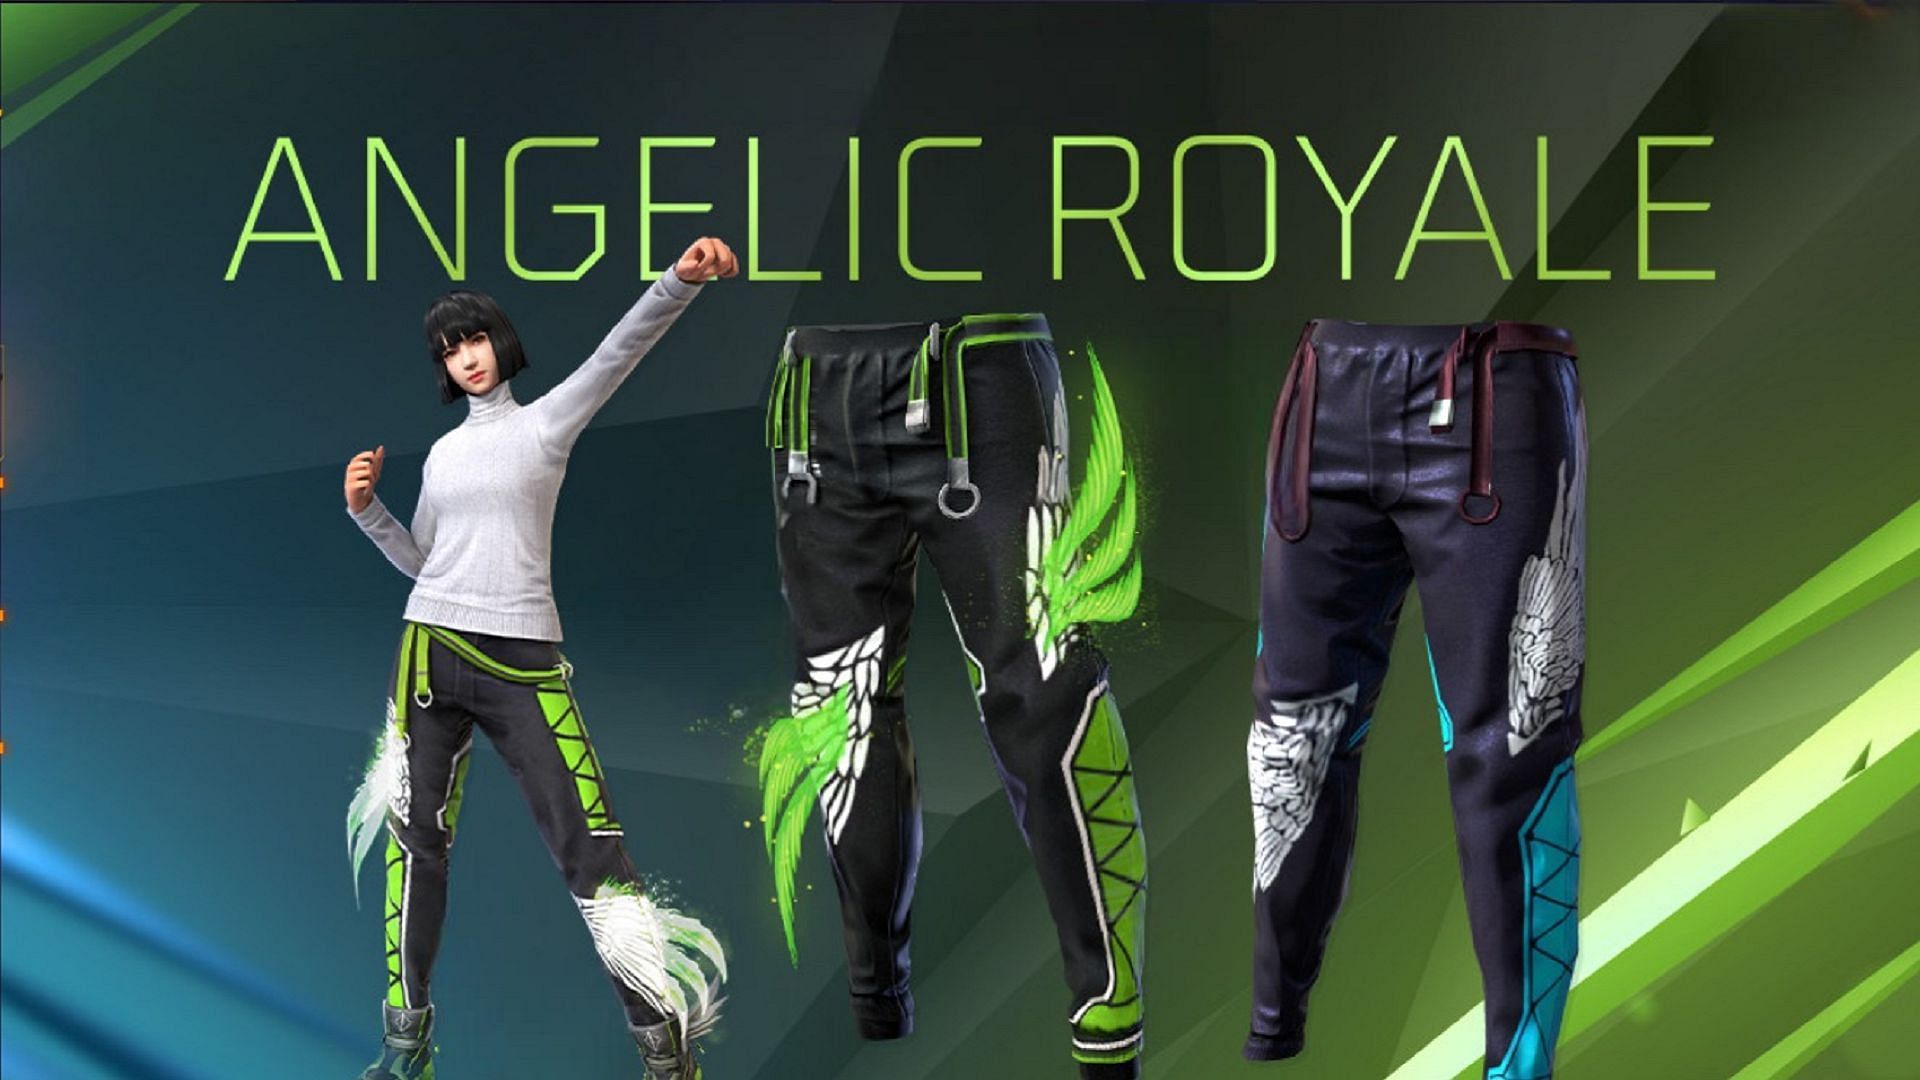 Angelic Royale has commenced in Free Fire (Image via Sportskeeda)